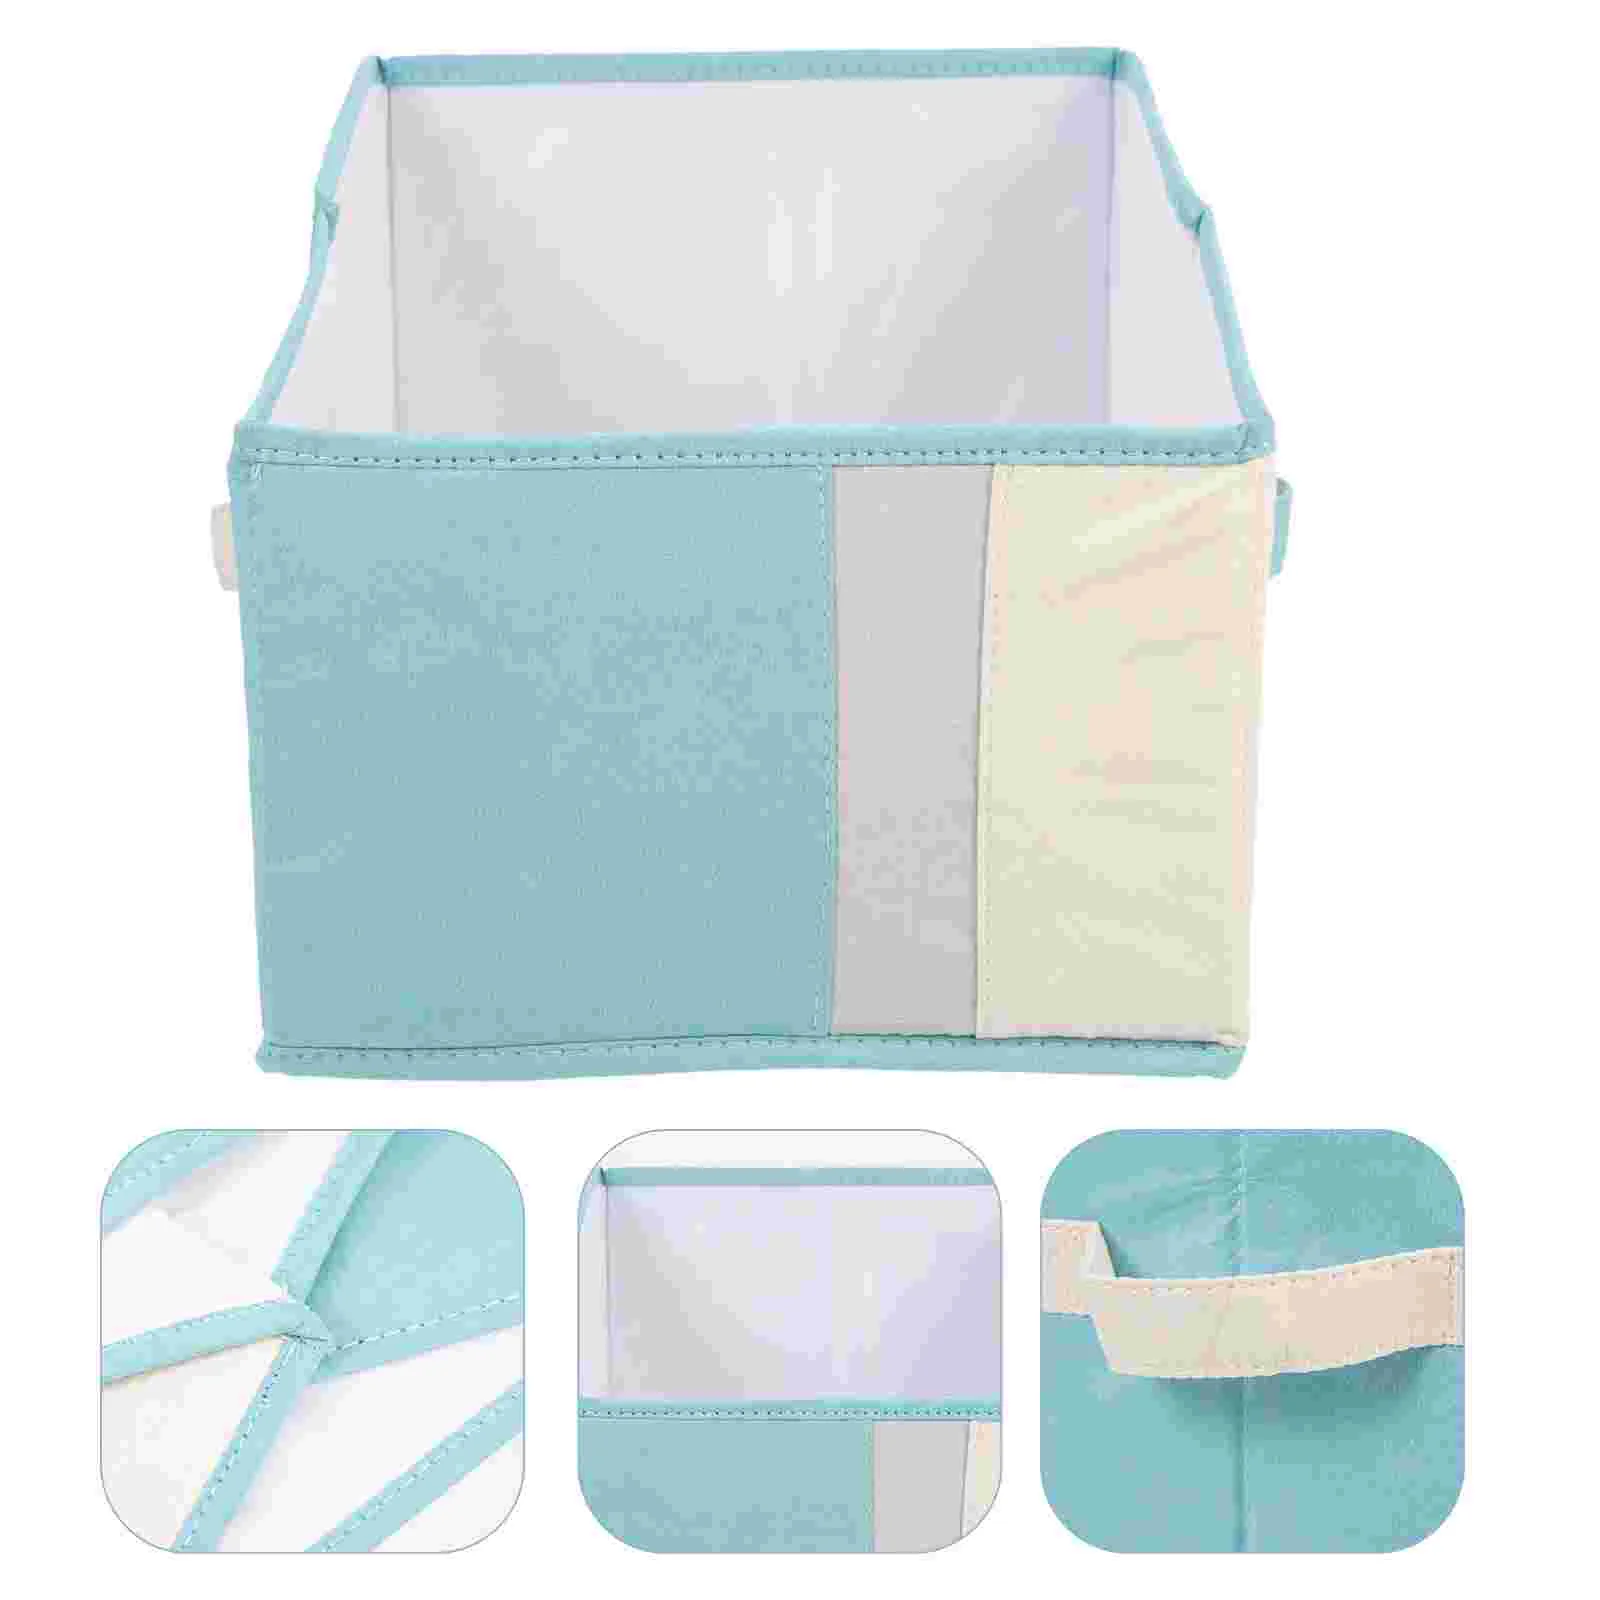 

Storage Basket Clothes Organizer Box Sundries Holder Bins Toy Fabric Wardrobe Closet Foldabletoys Folding Container Bedroom